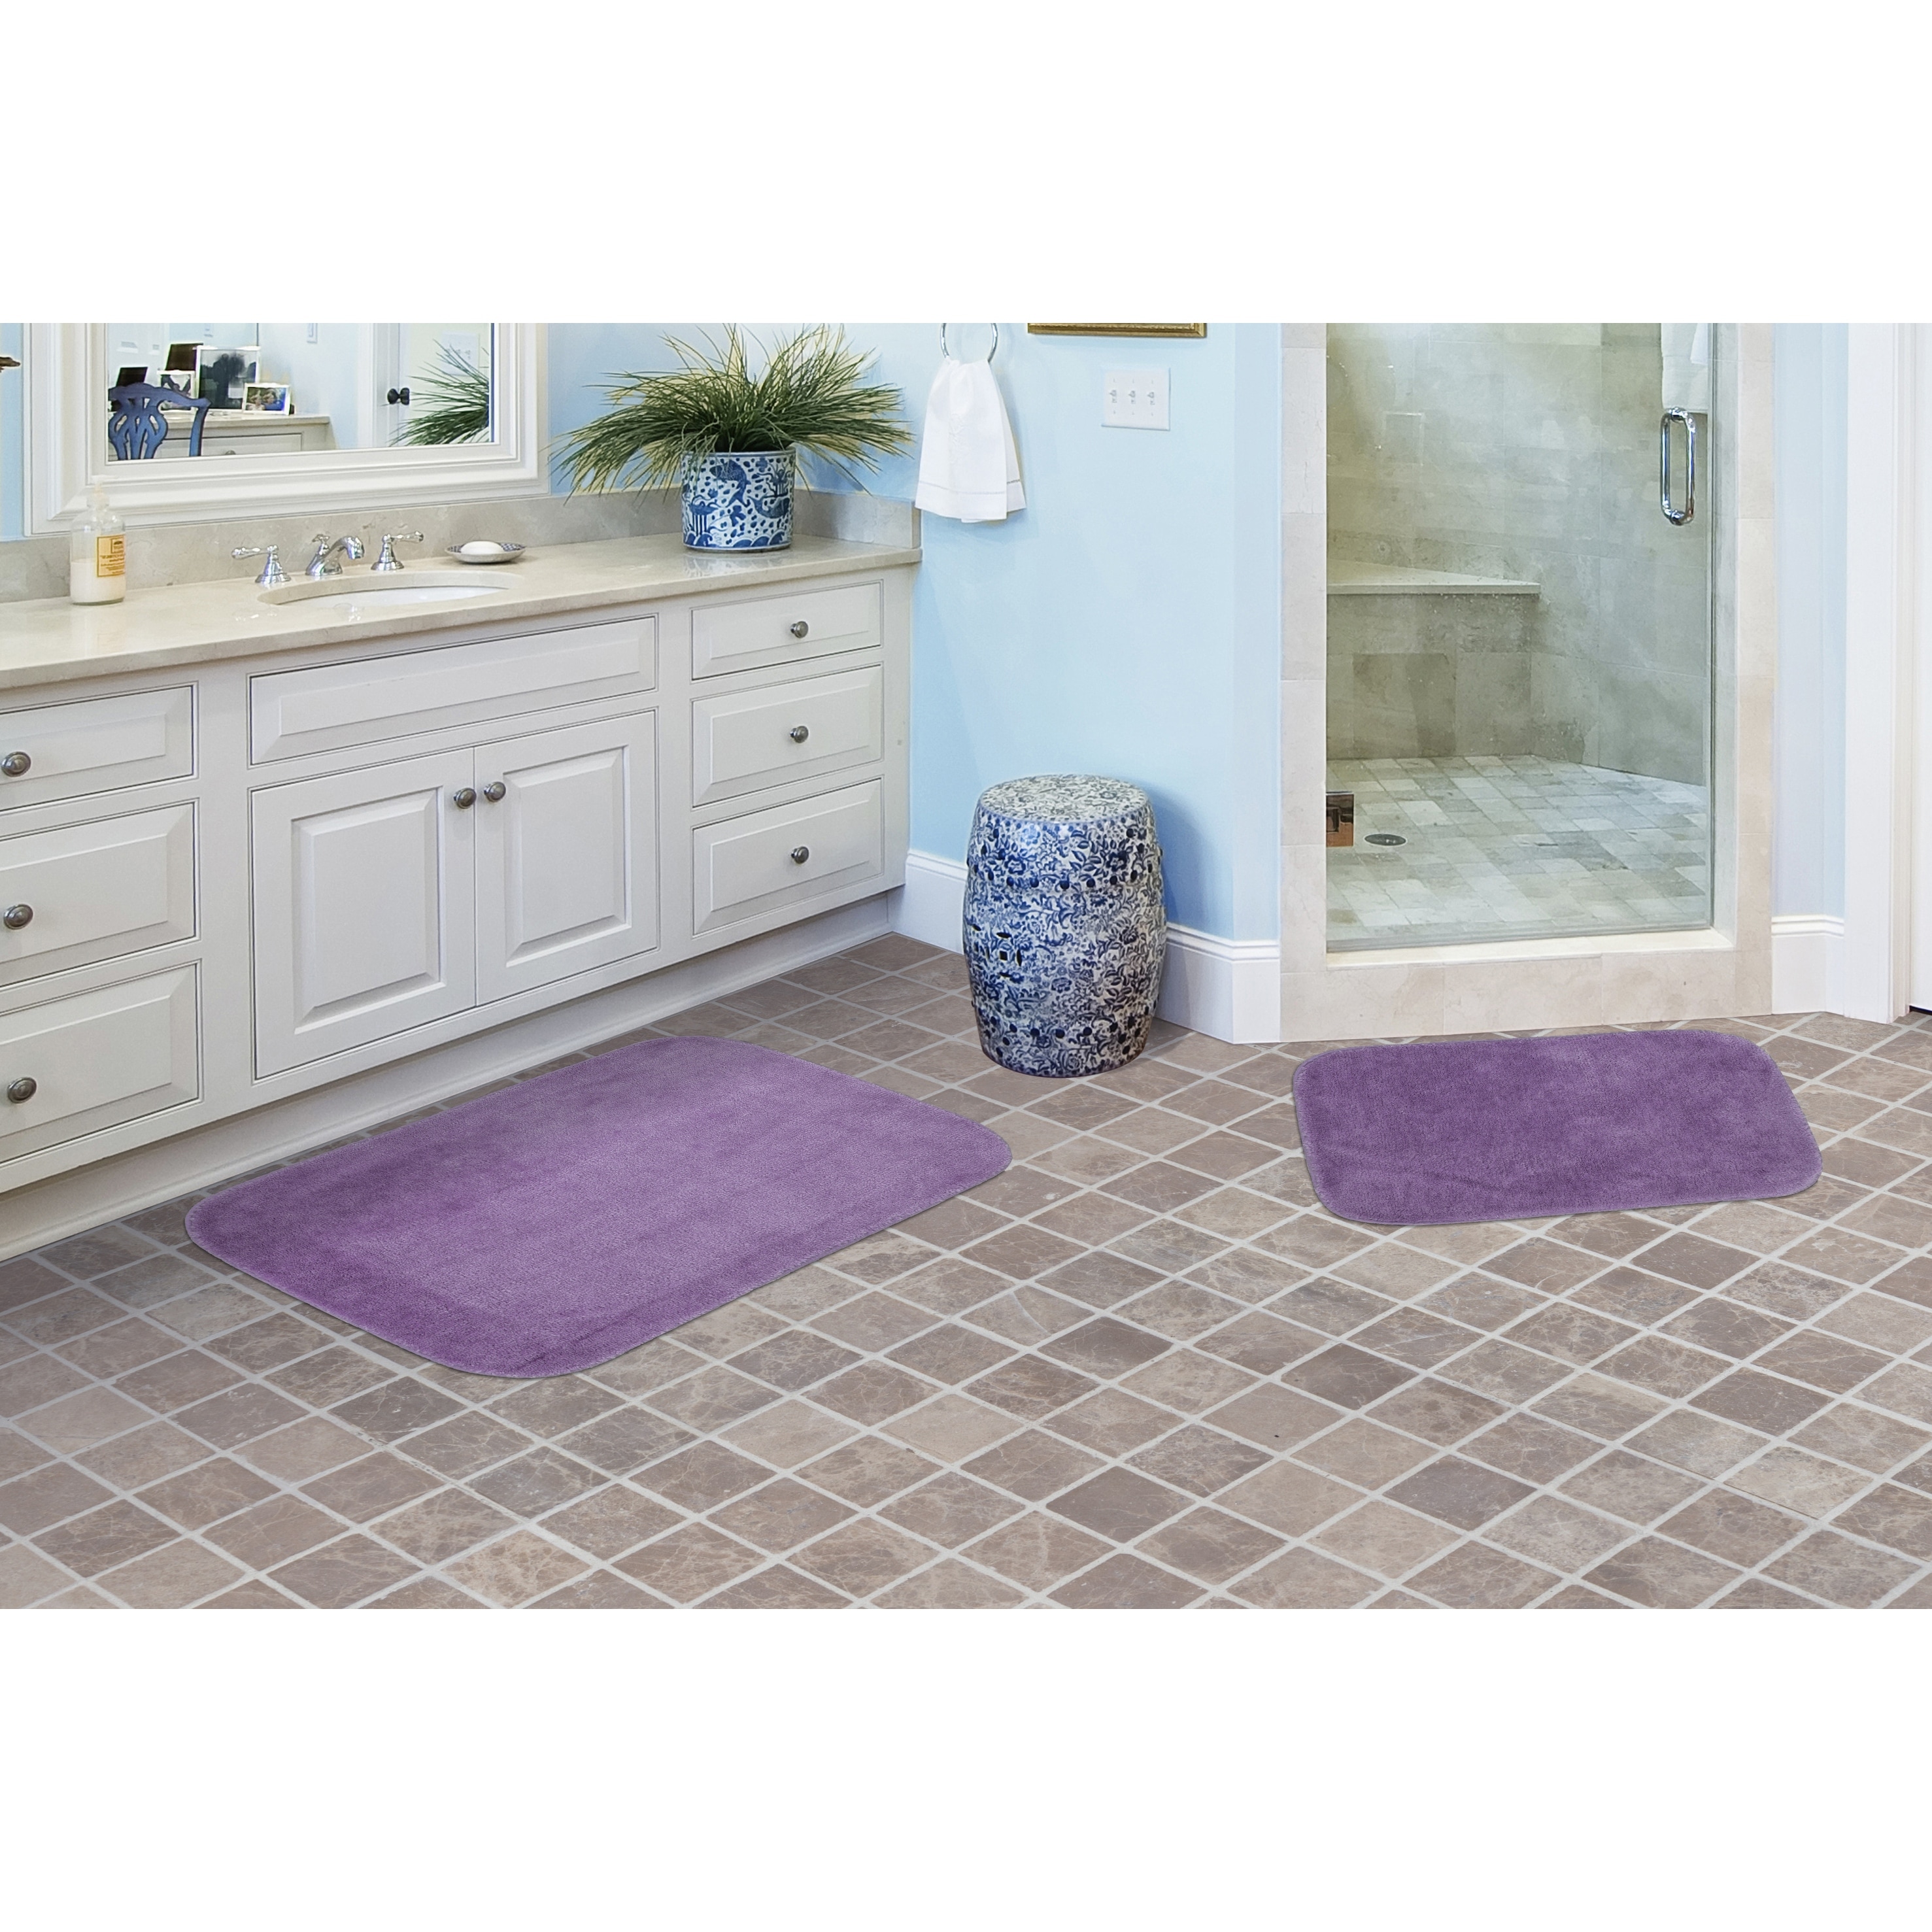 https://ak1.ostkcdn.com/images/products/is/images/direct/bdcafdd062cda9bc0f3d09c4805104ee54e3c7ce/Traditional-Purple-Plush-Washable-Nylon-Bathroom-Rug-Runner.jpg